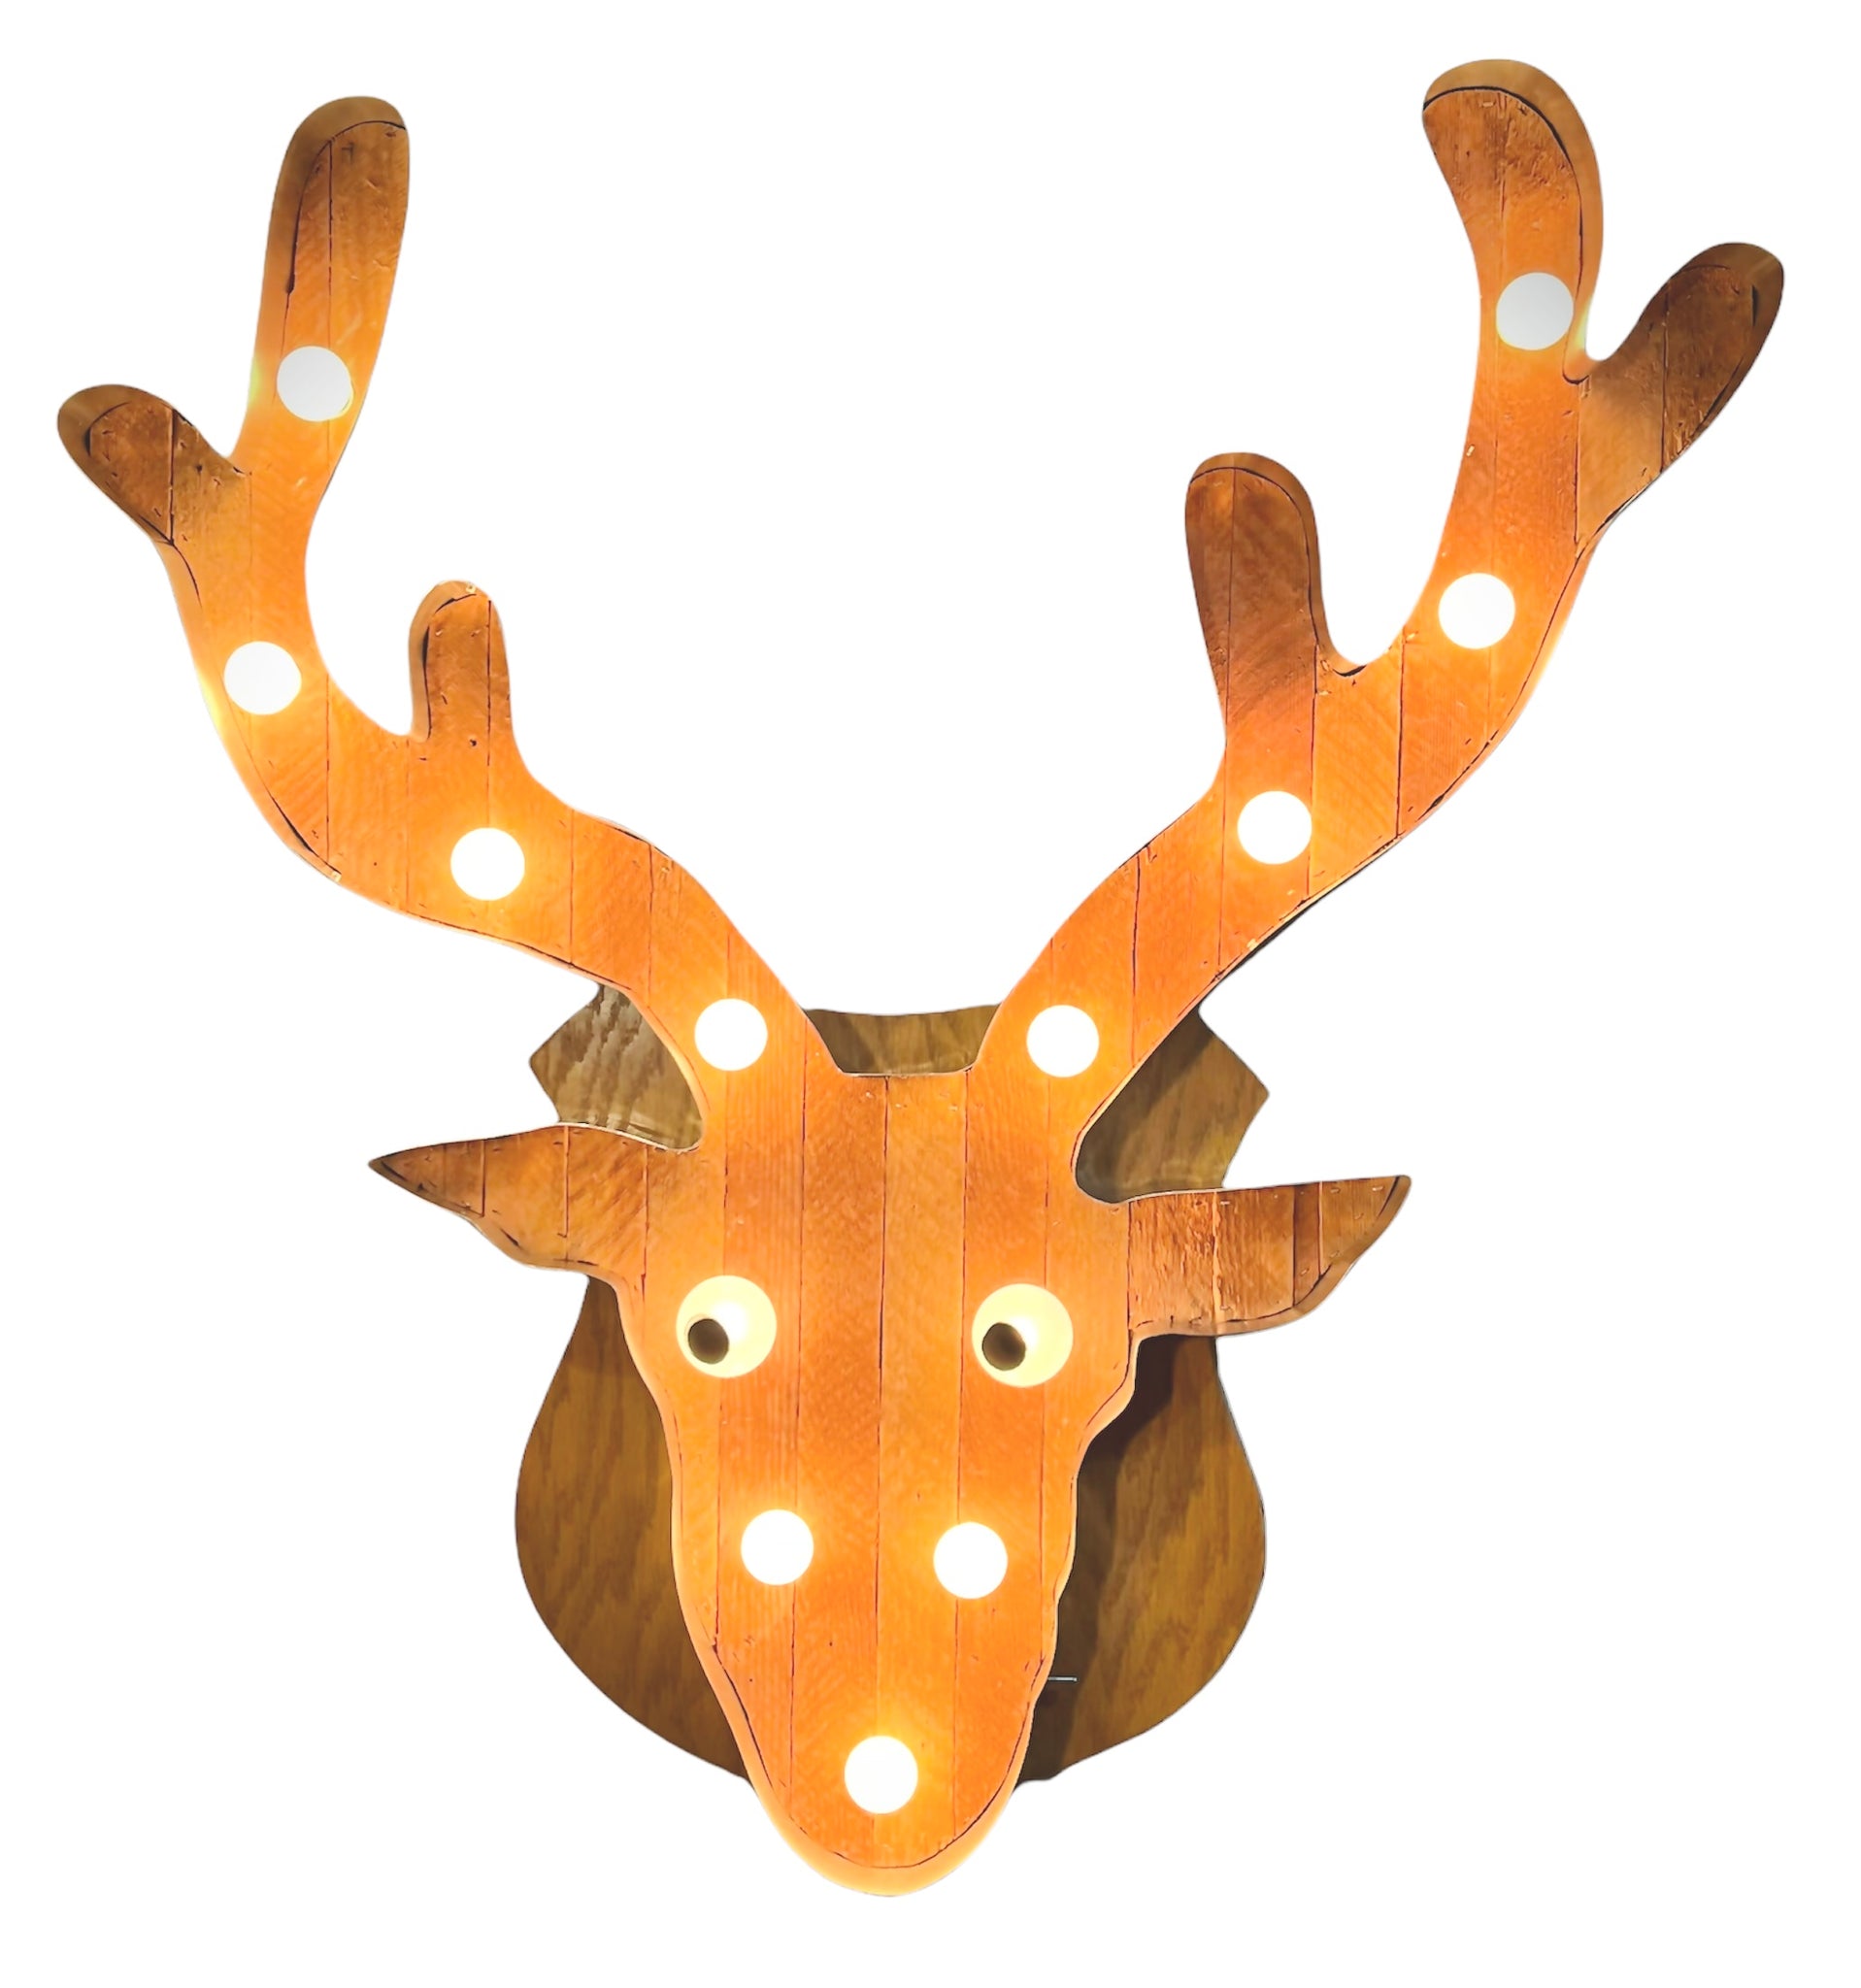 Mounted Deer Head Marquee Light Designs Coppersmith Scott –